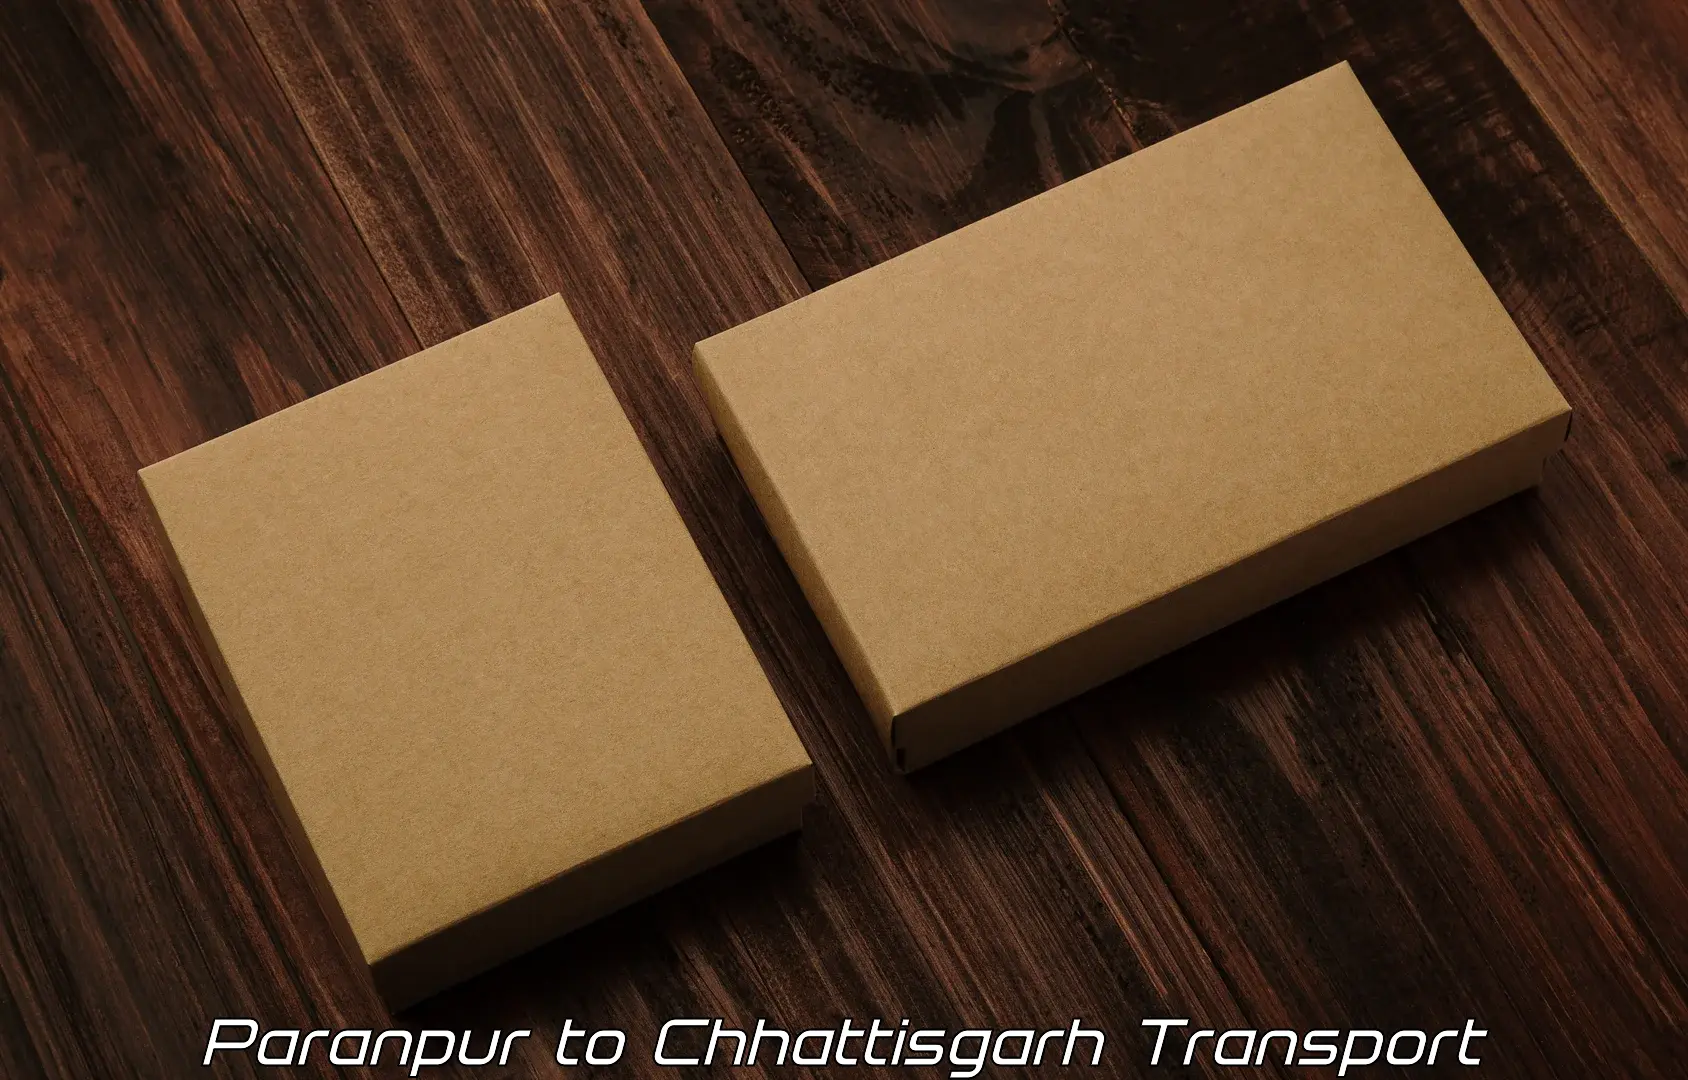 Air freight transport services in Paranpur to Korea Chhattisgarh